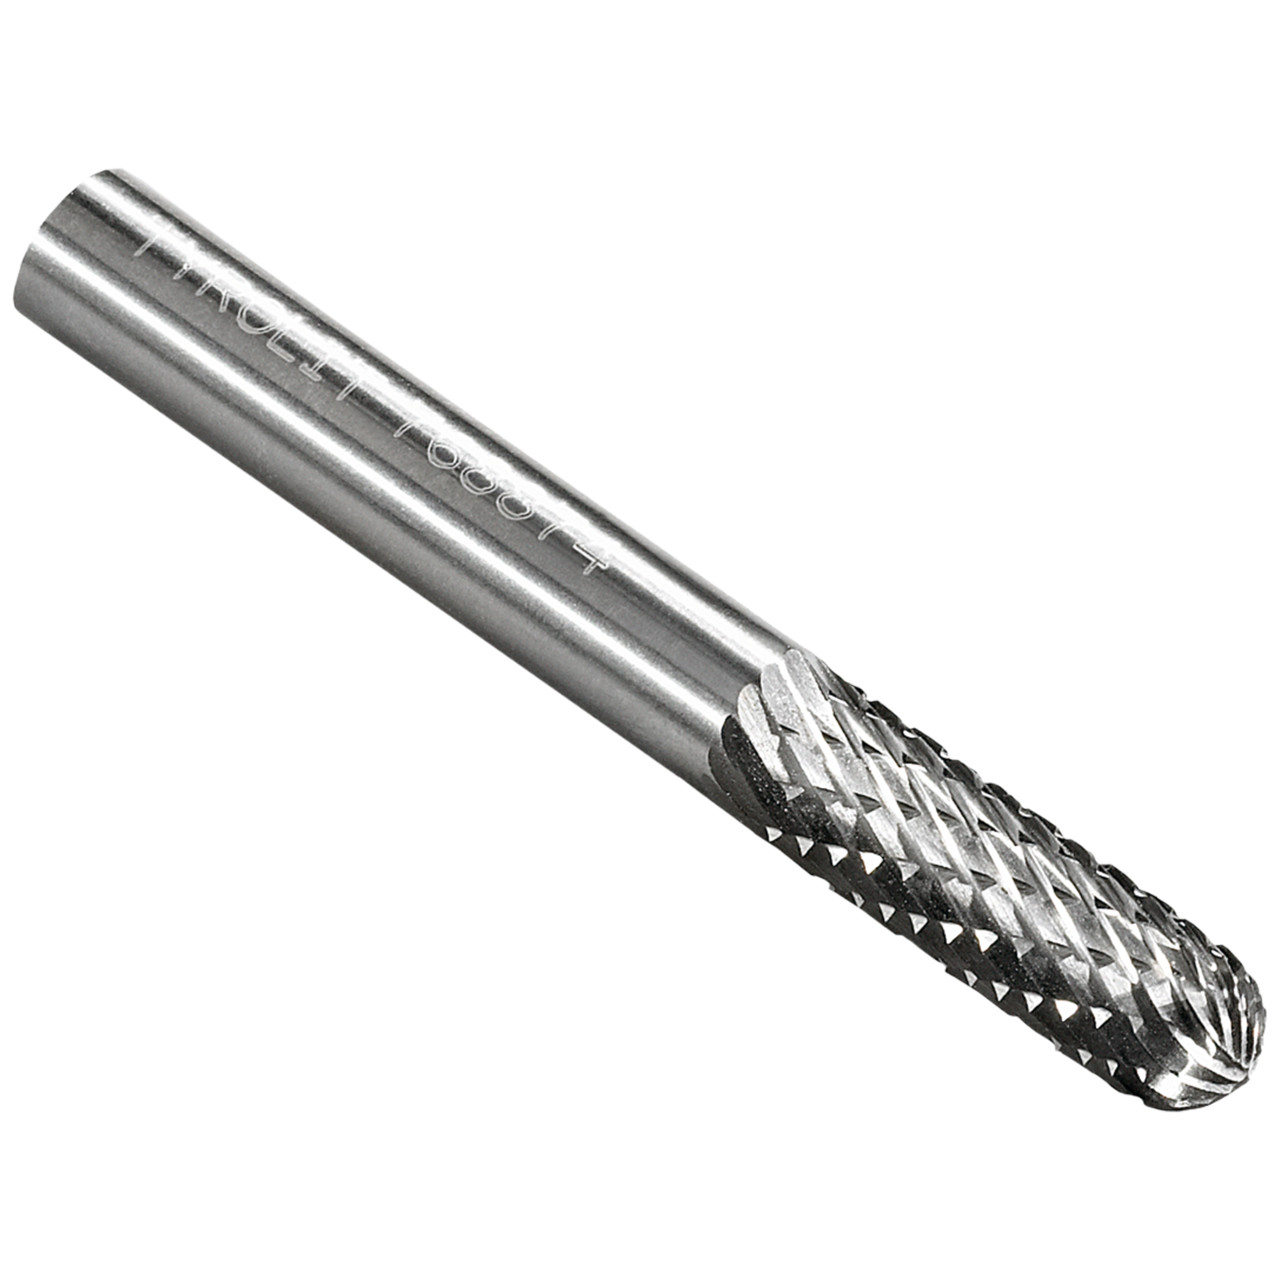 Fresa in metallo duro Tyrolit DxT-SxL 6x19-6x50 Per ghisa, acciaio e acciaio inox, forma: 52WRC - cilindrica, Art. 768874